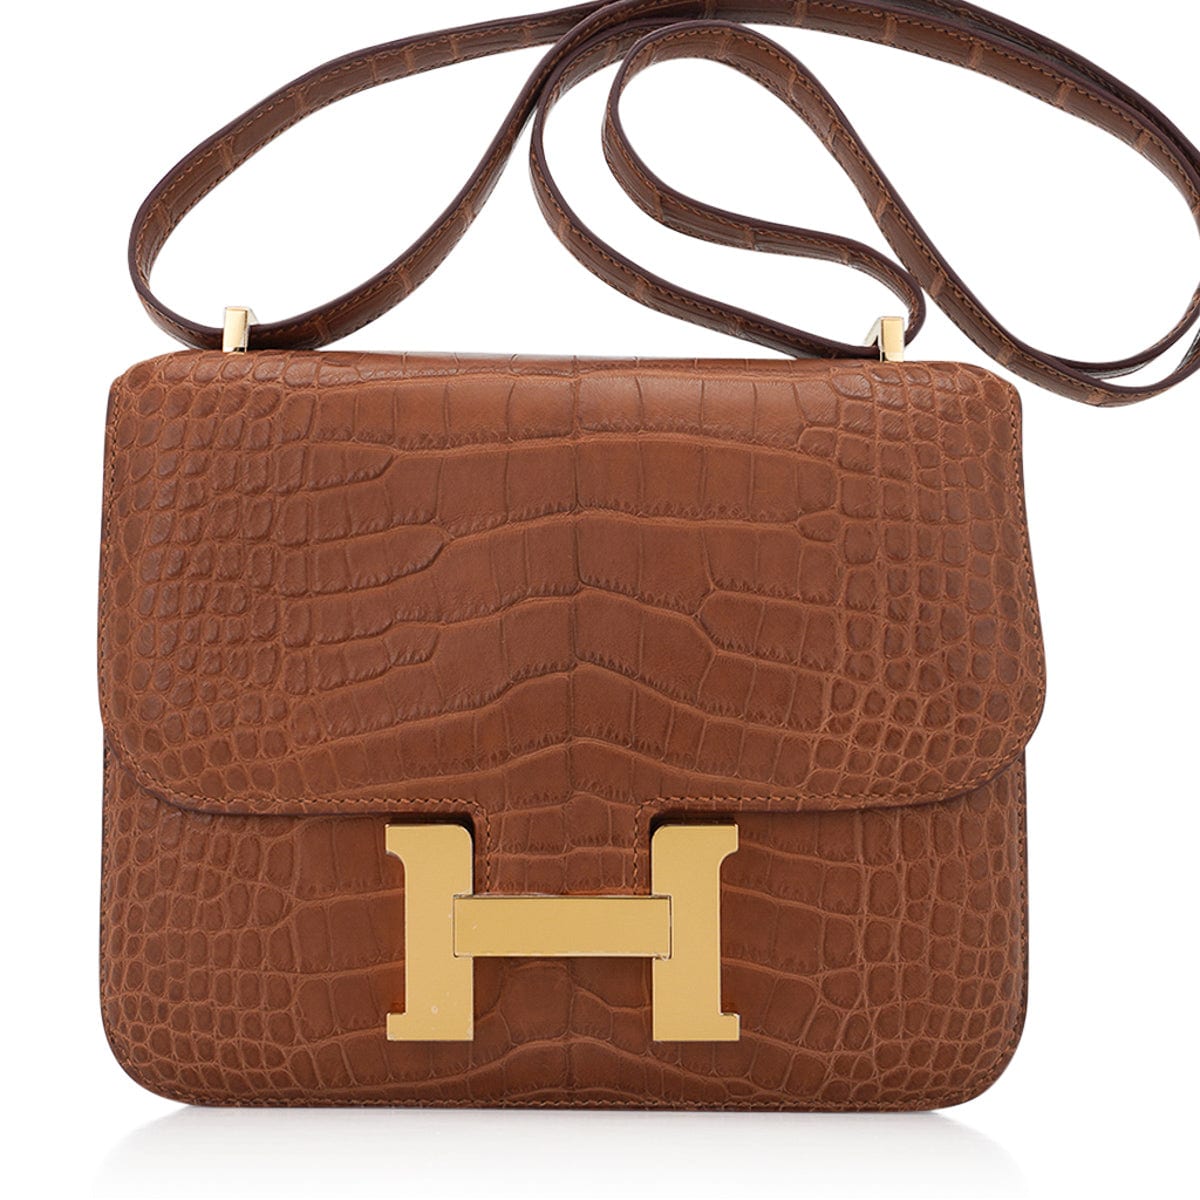 Hermès Bleu Saphir Constance 18cm of Shiny Alligator with Gold Hardware, Handbags & Accessories Online, Ecommerce Retail